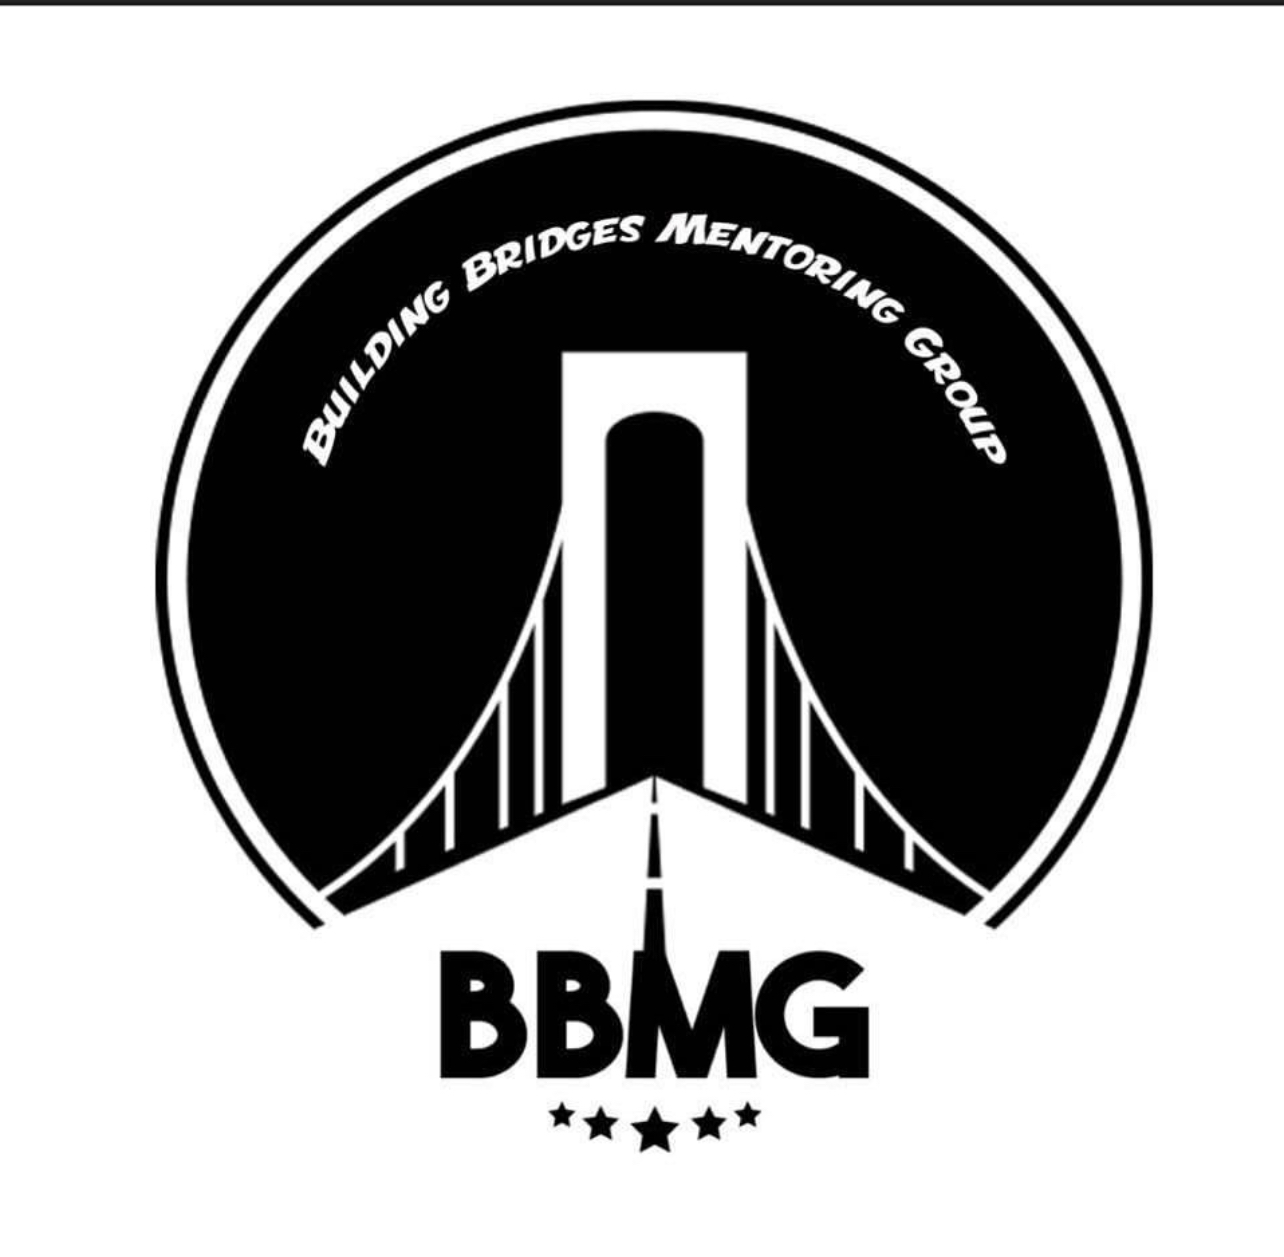 Building Bridges Mentoring Group Inc logo